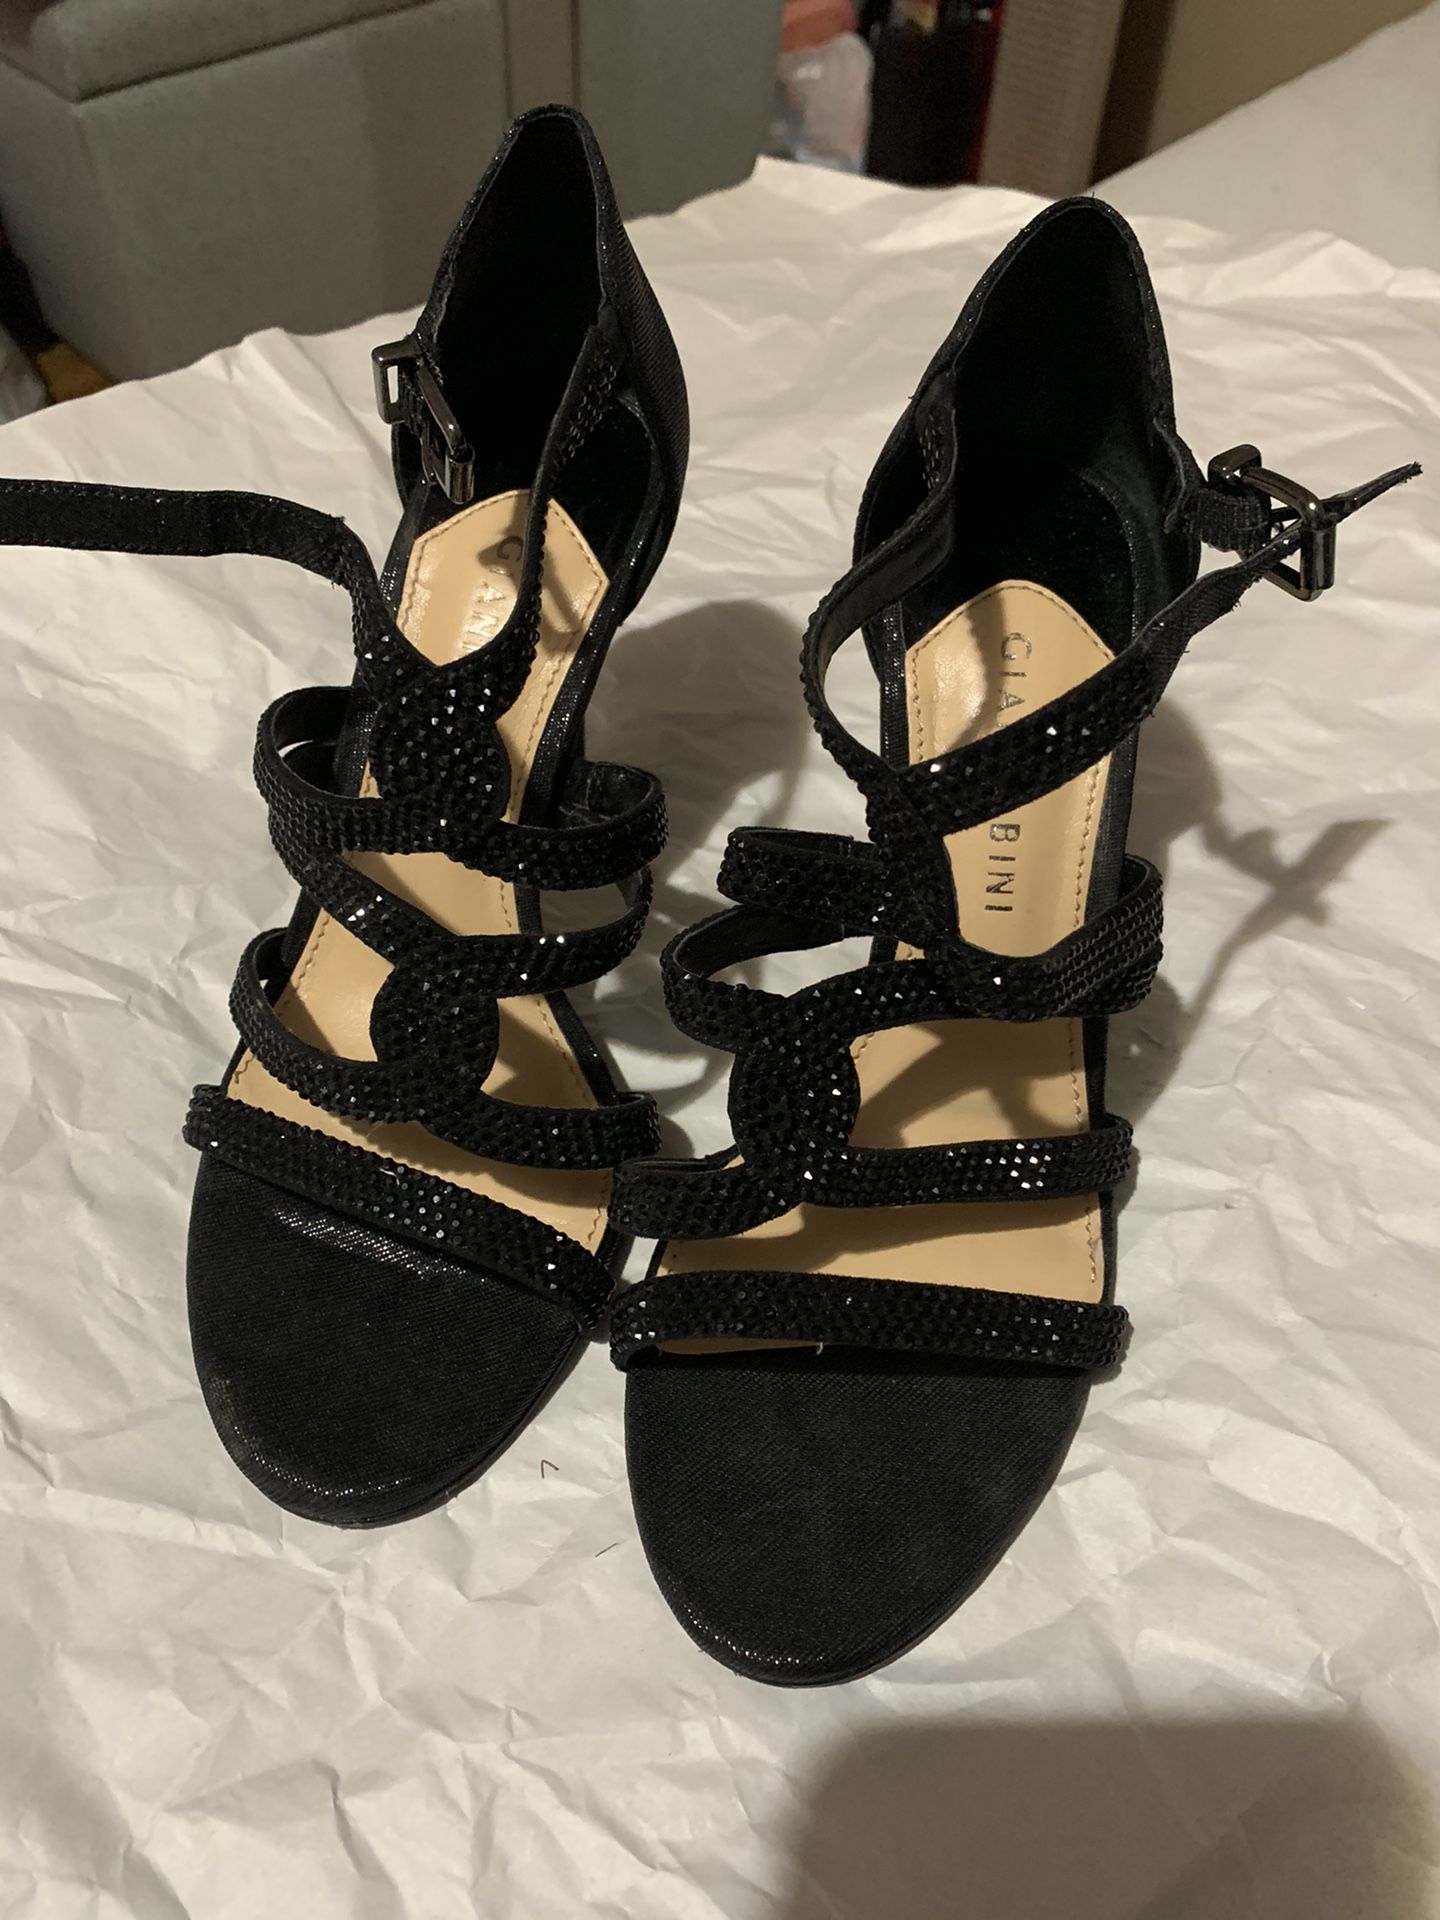 Party black heels size 6